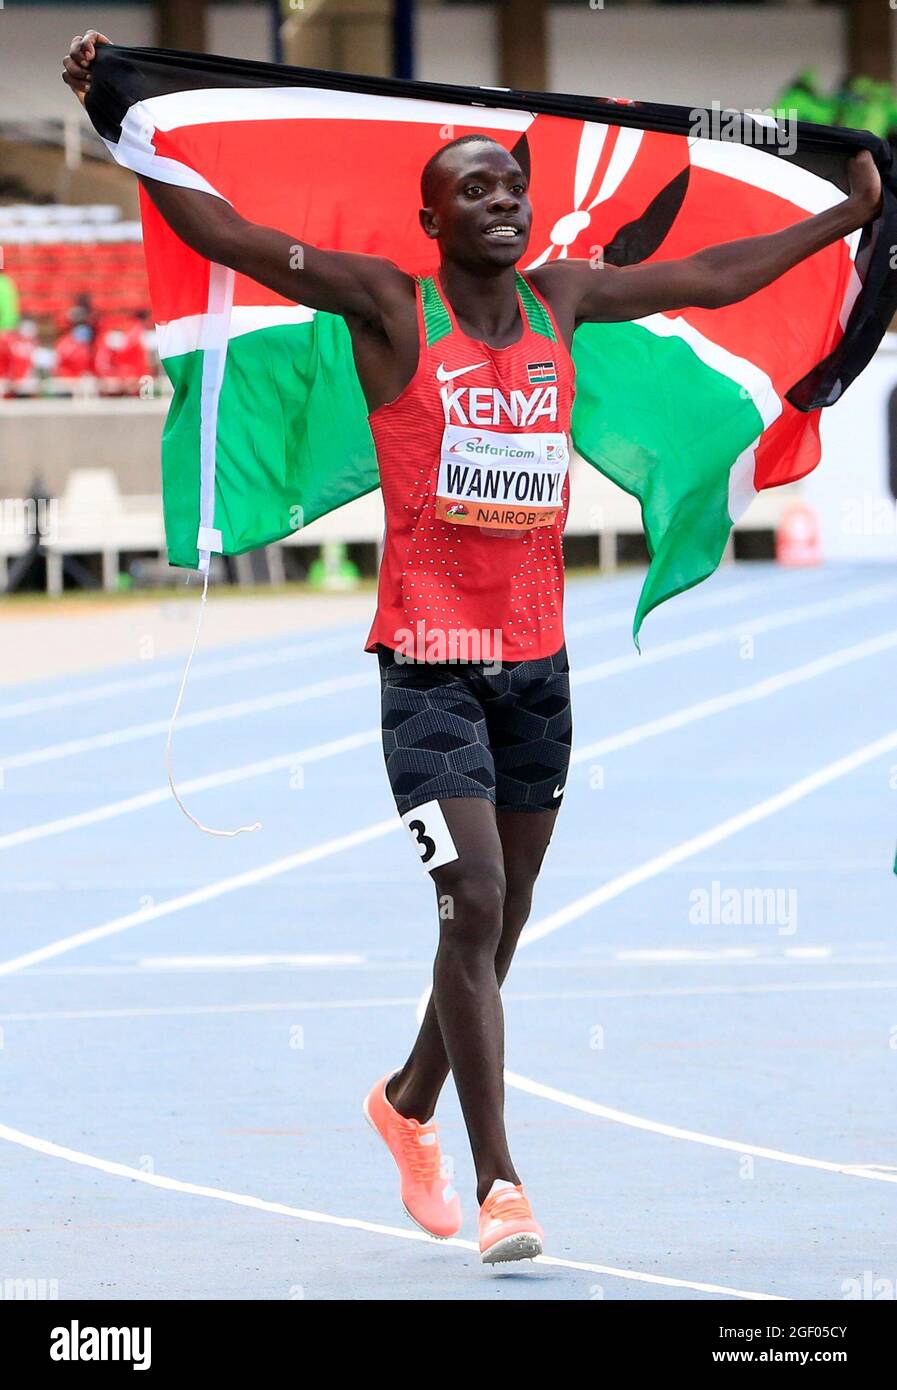 Atletica - Campionati mondiali di atletica U20 2021 - Emmanuel Wanyonyi in Kenya celebra dopo la vittoria nella finale maschile di 800 m - Kasarani Stadium, Nairobi, Kenya - 22 agosto 2021. REUTERS/Thomas Mukoya Foto Stock